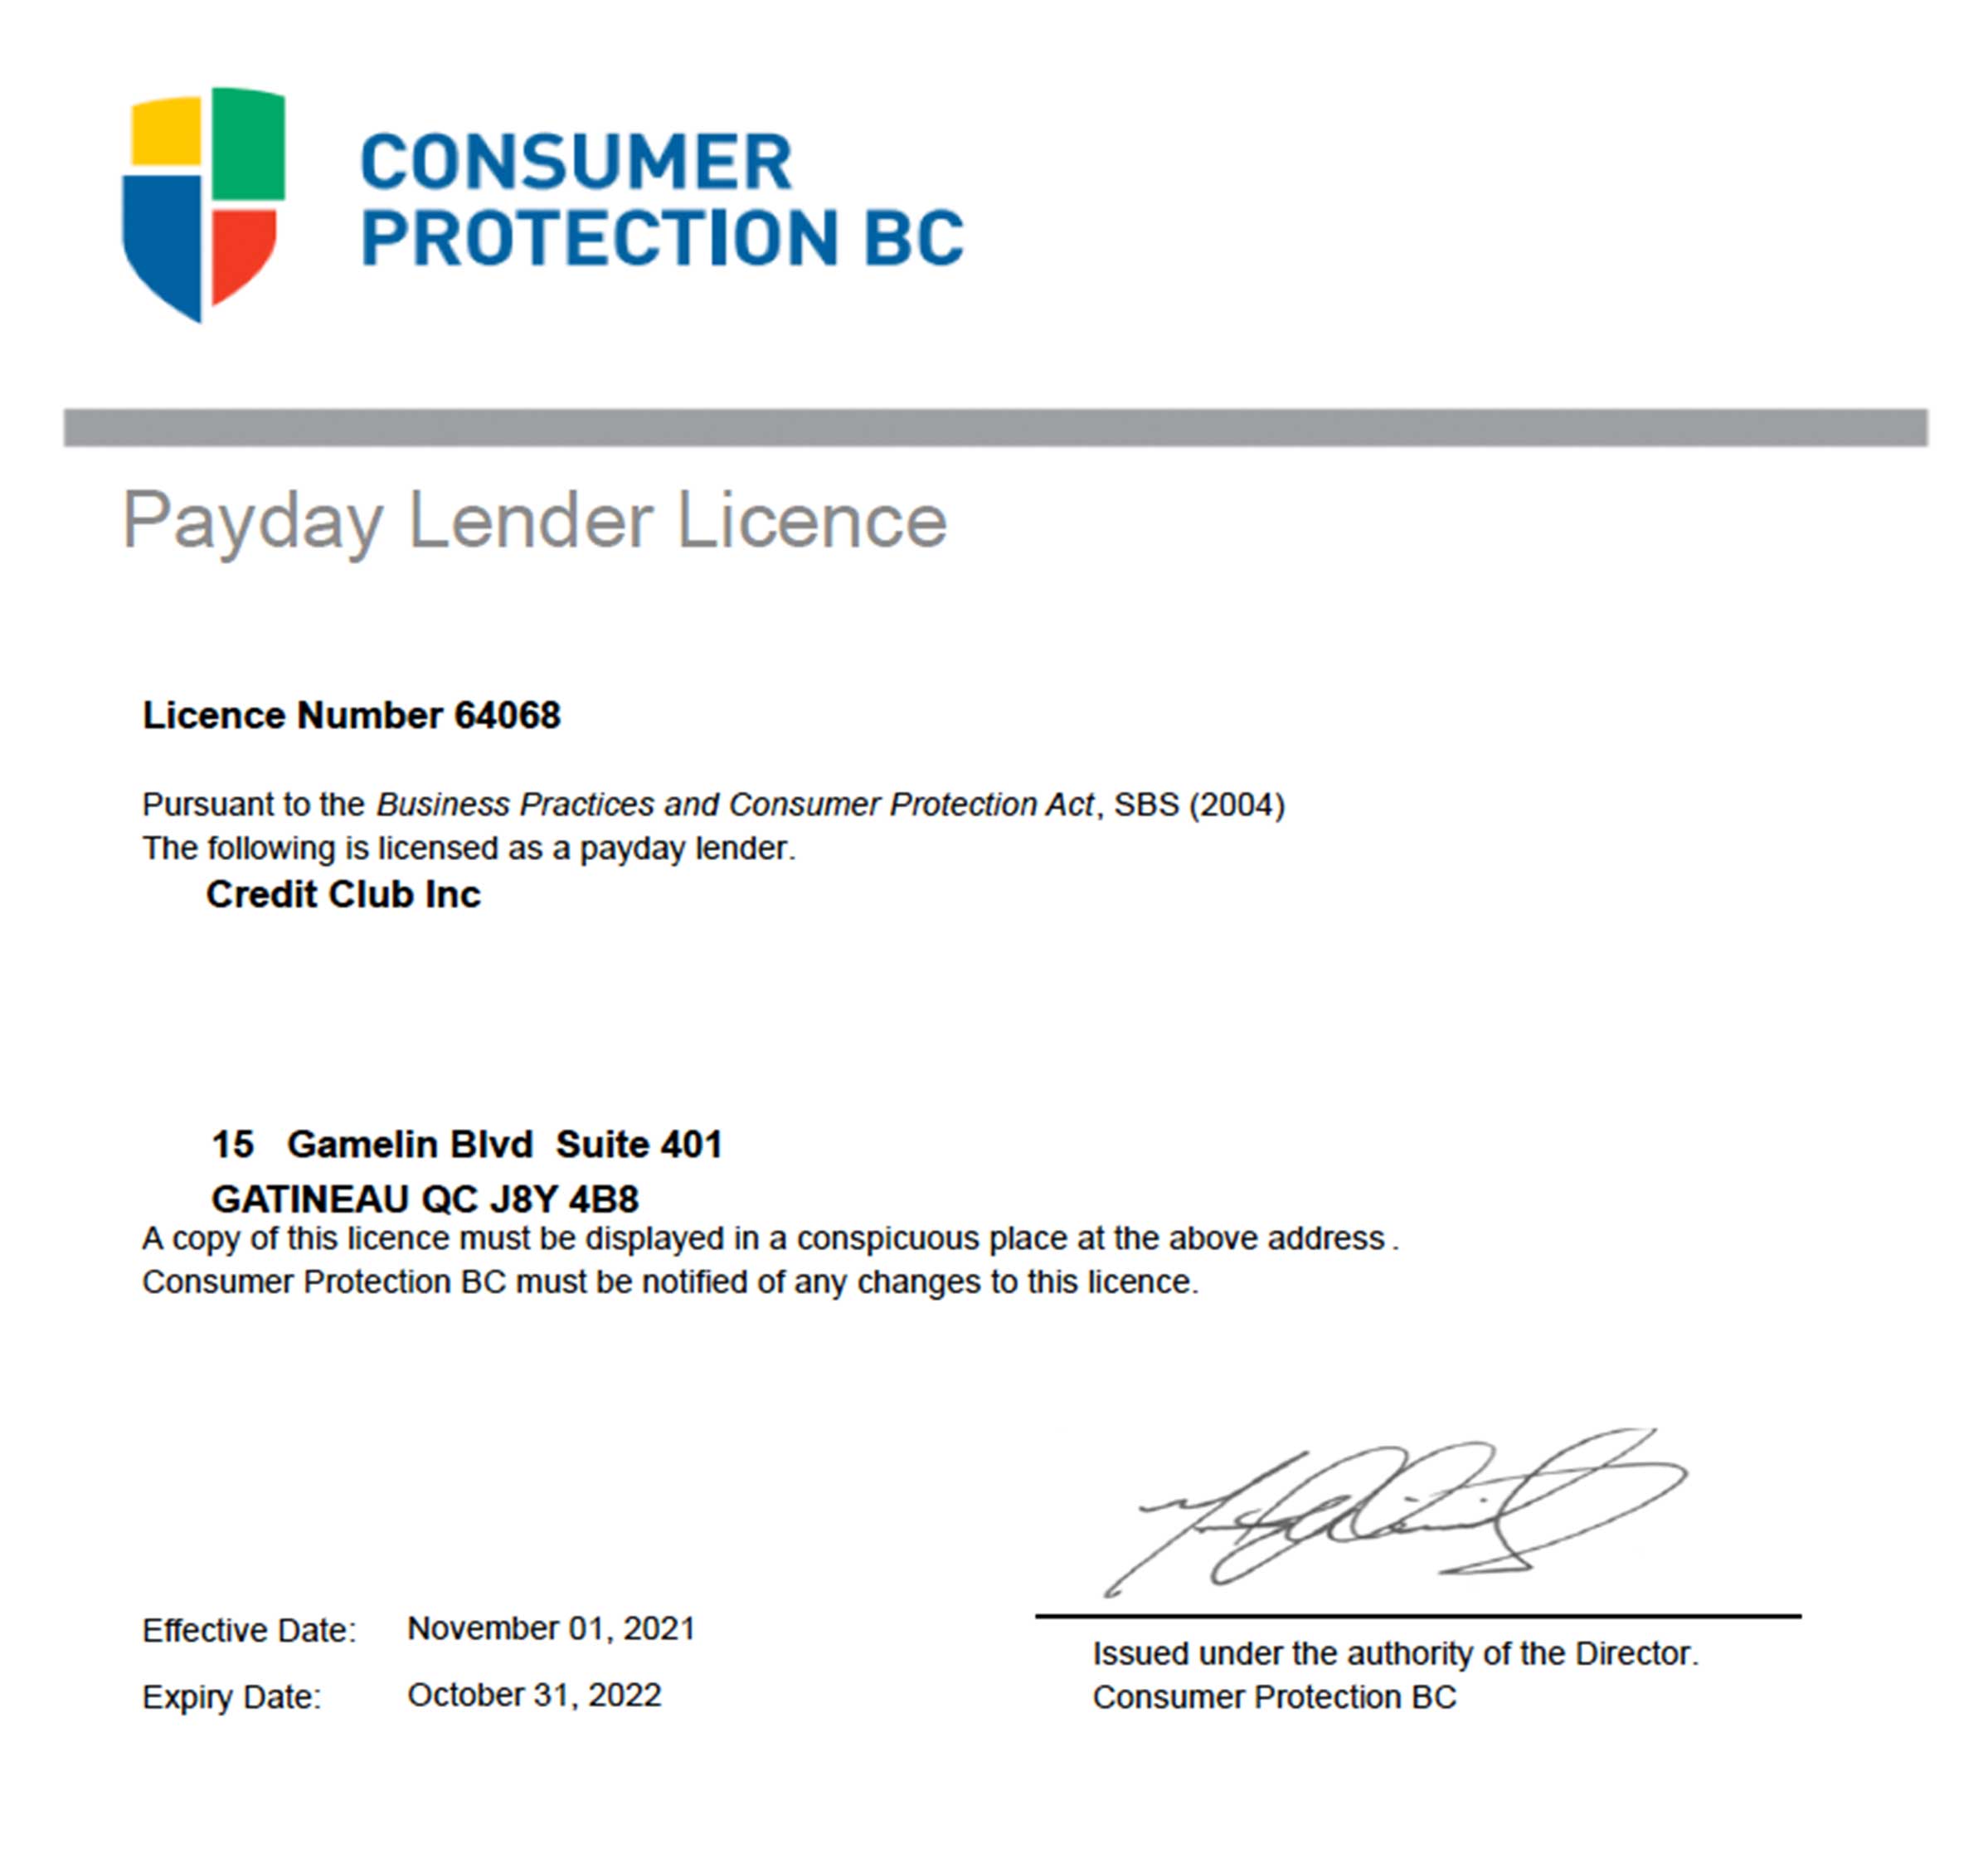 British Columbia Credit Club's consumer protection BC